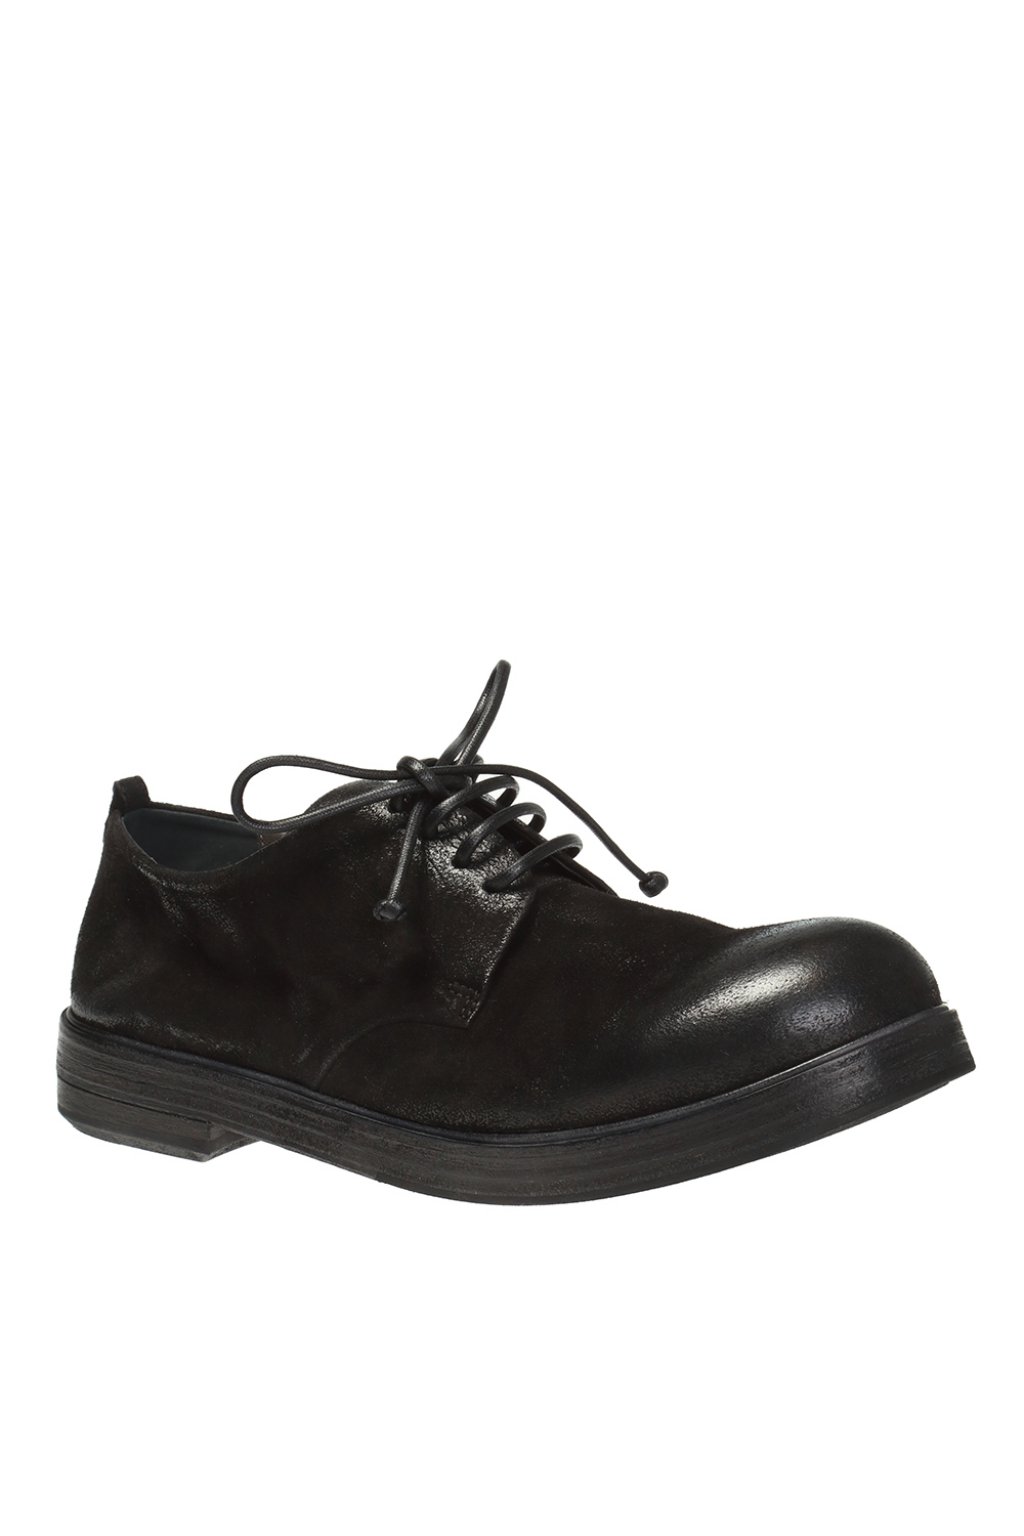 Marsell ‘Zucca Zeppa’ derby shoes | Men's Shoes | Vitkac